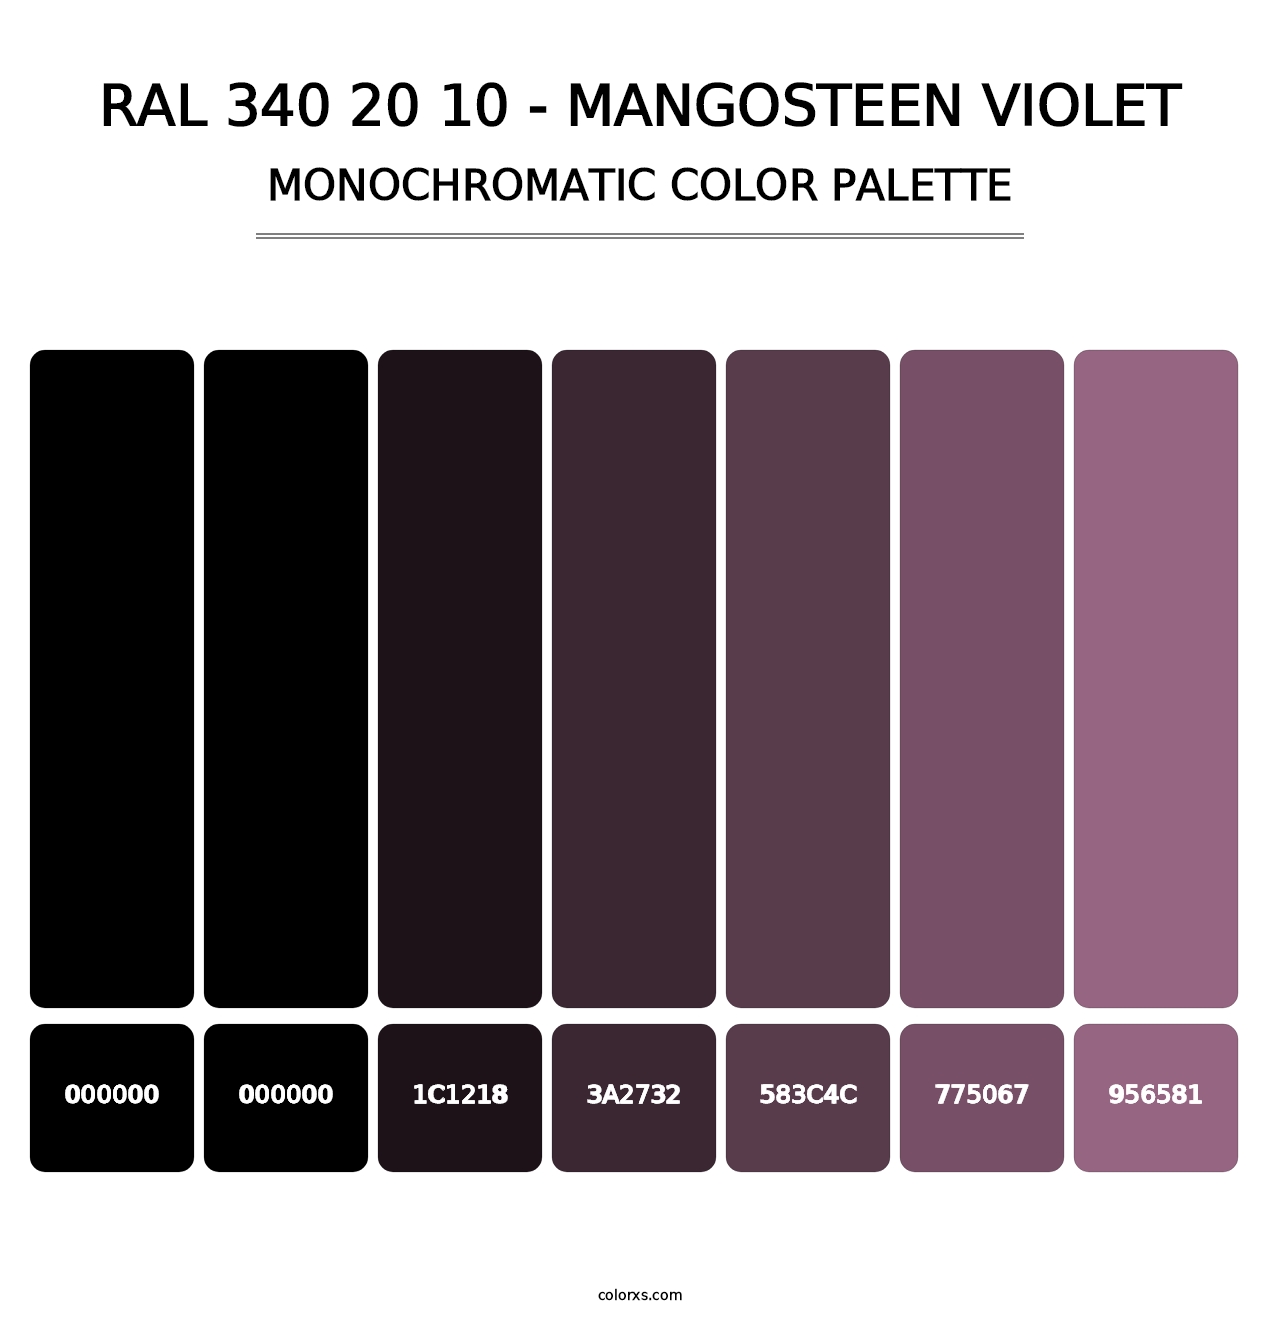 RAL 340 20 10 - Mangosteen Violet - Monochromatic Color Palette